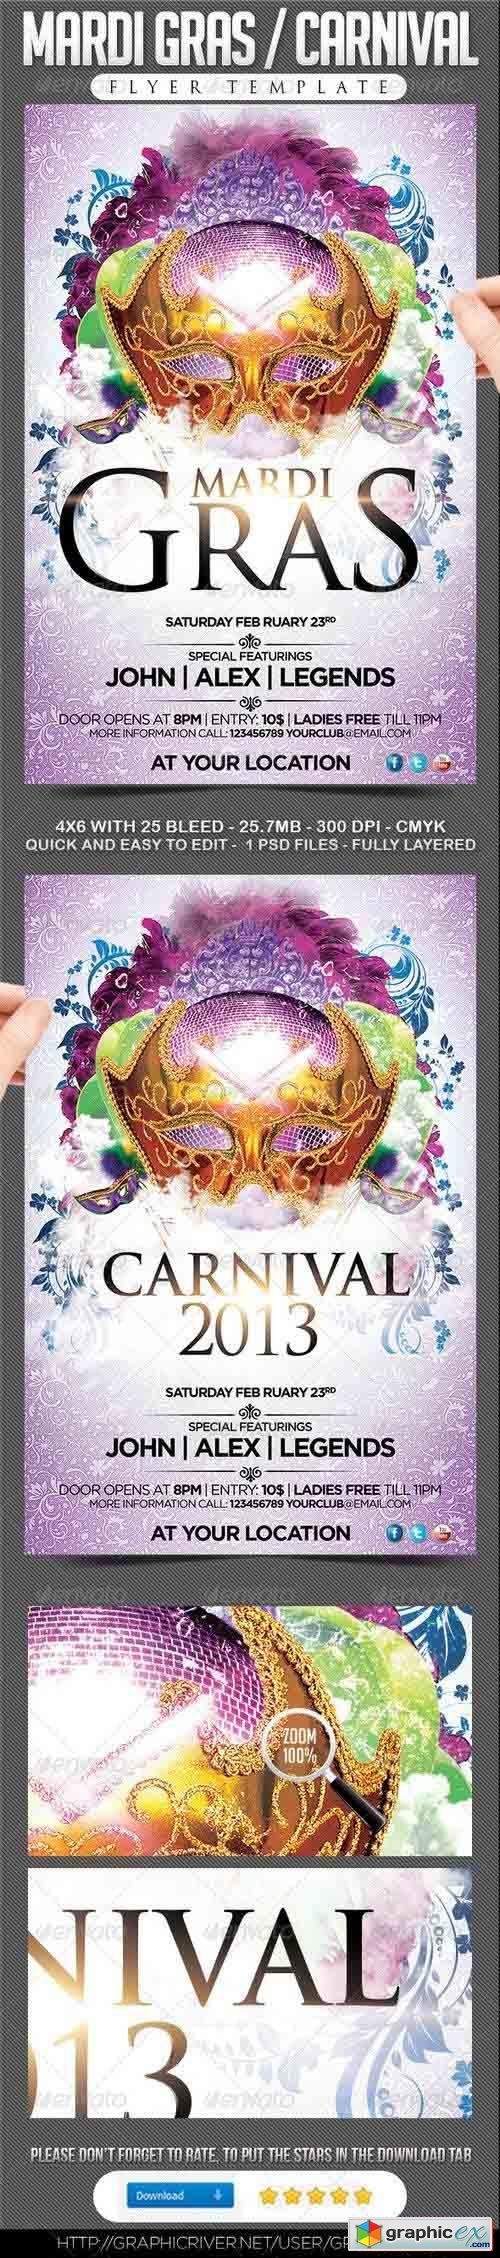 Mardi Gras / Carnival Flyer 